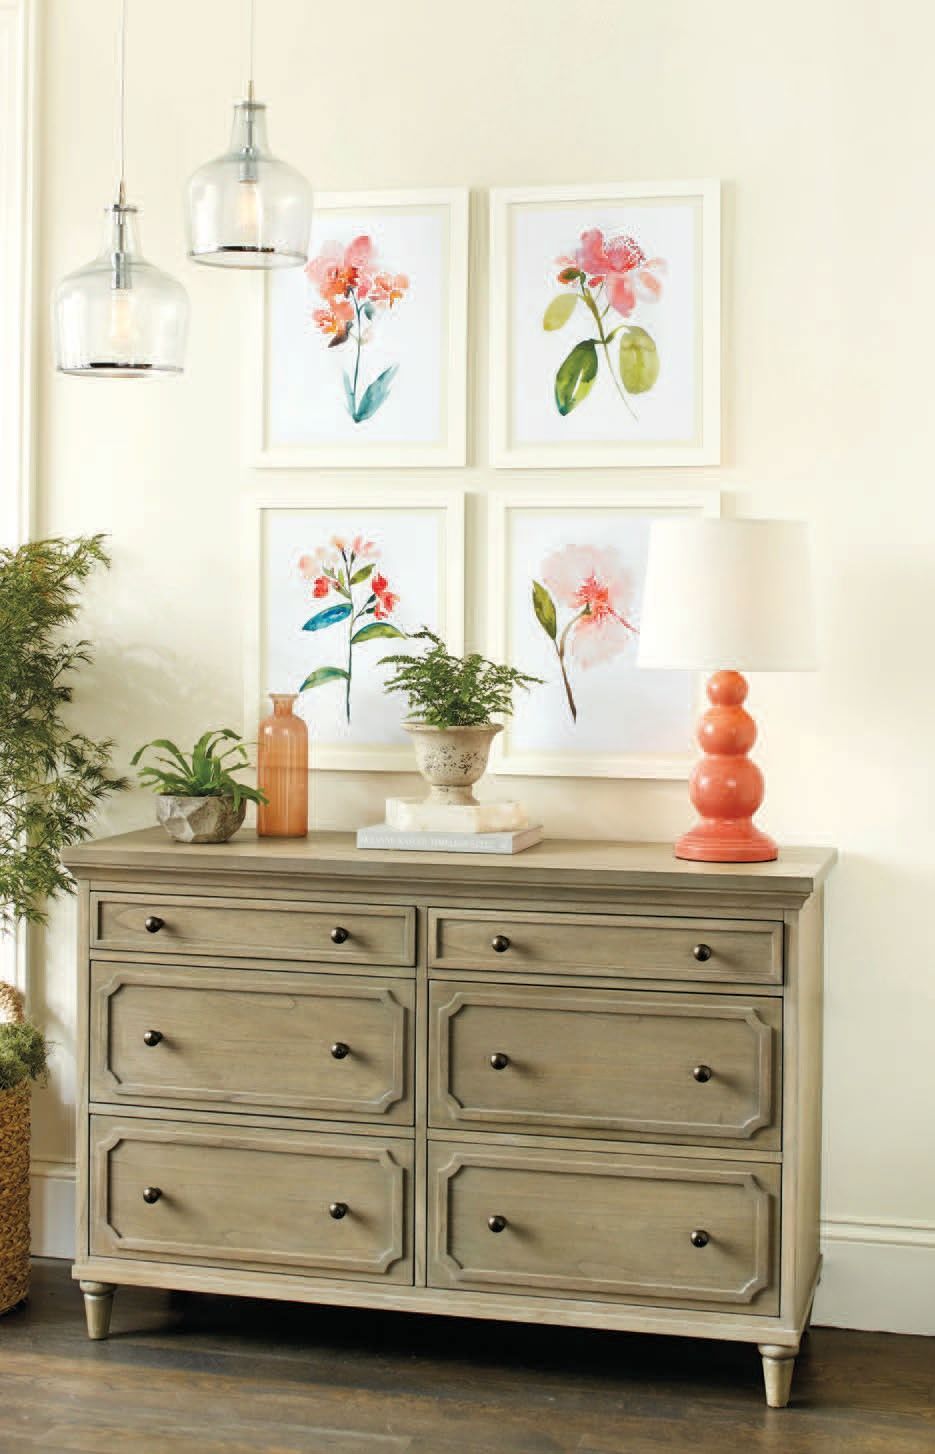 Bedroom decorating ideas -   12 plants In Bedroom dresser
 ideas